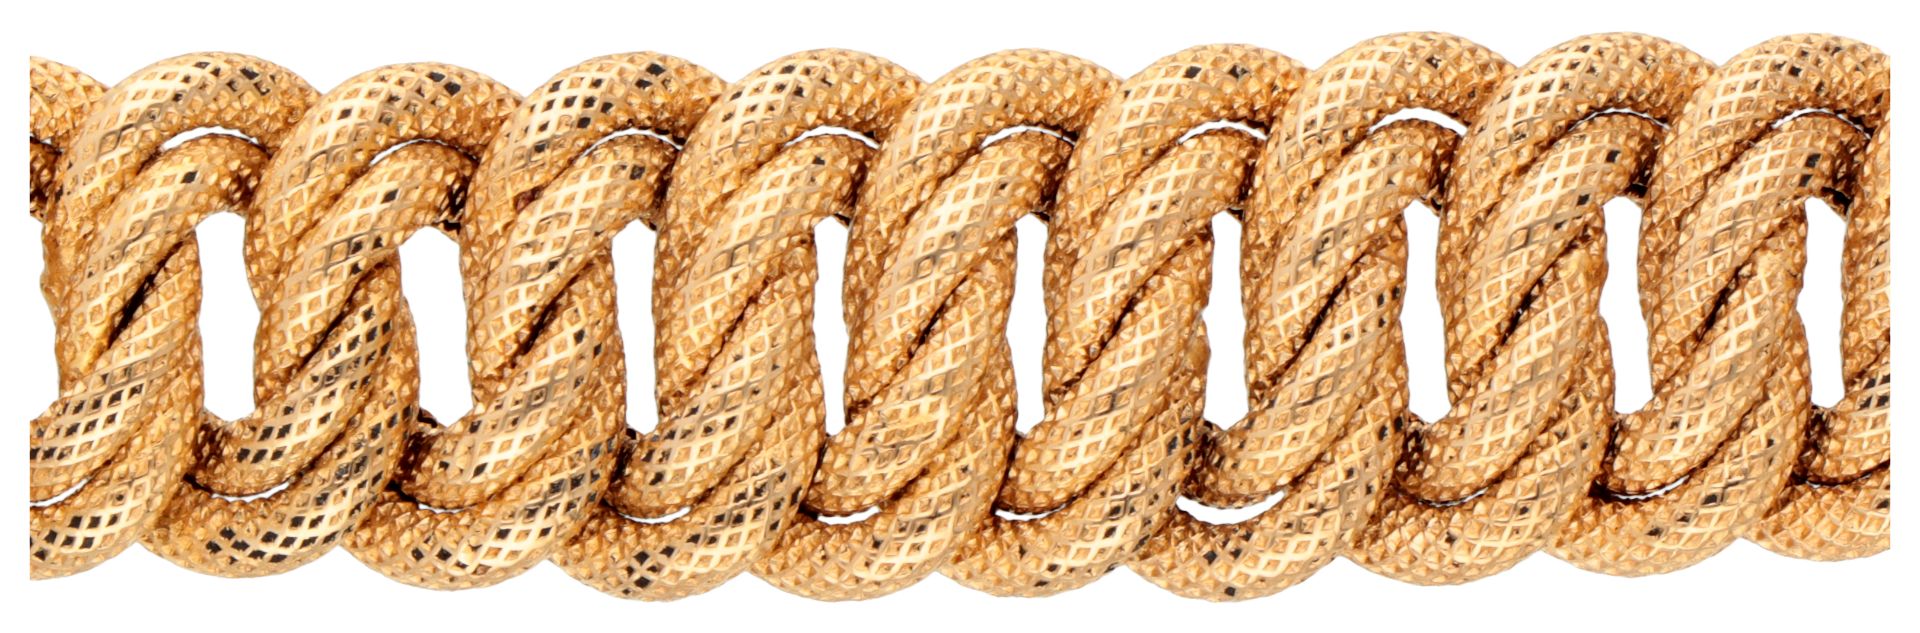 No reserve - UnoAErre 18K yellow gold link bracelet.  - Image 3 of 3